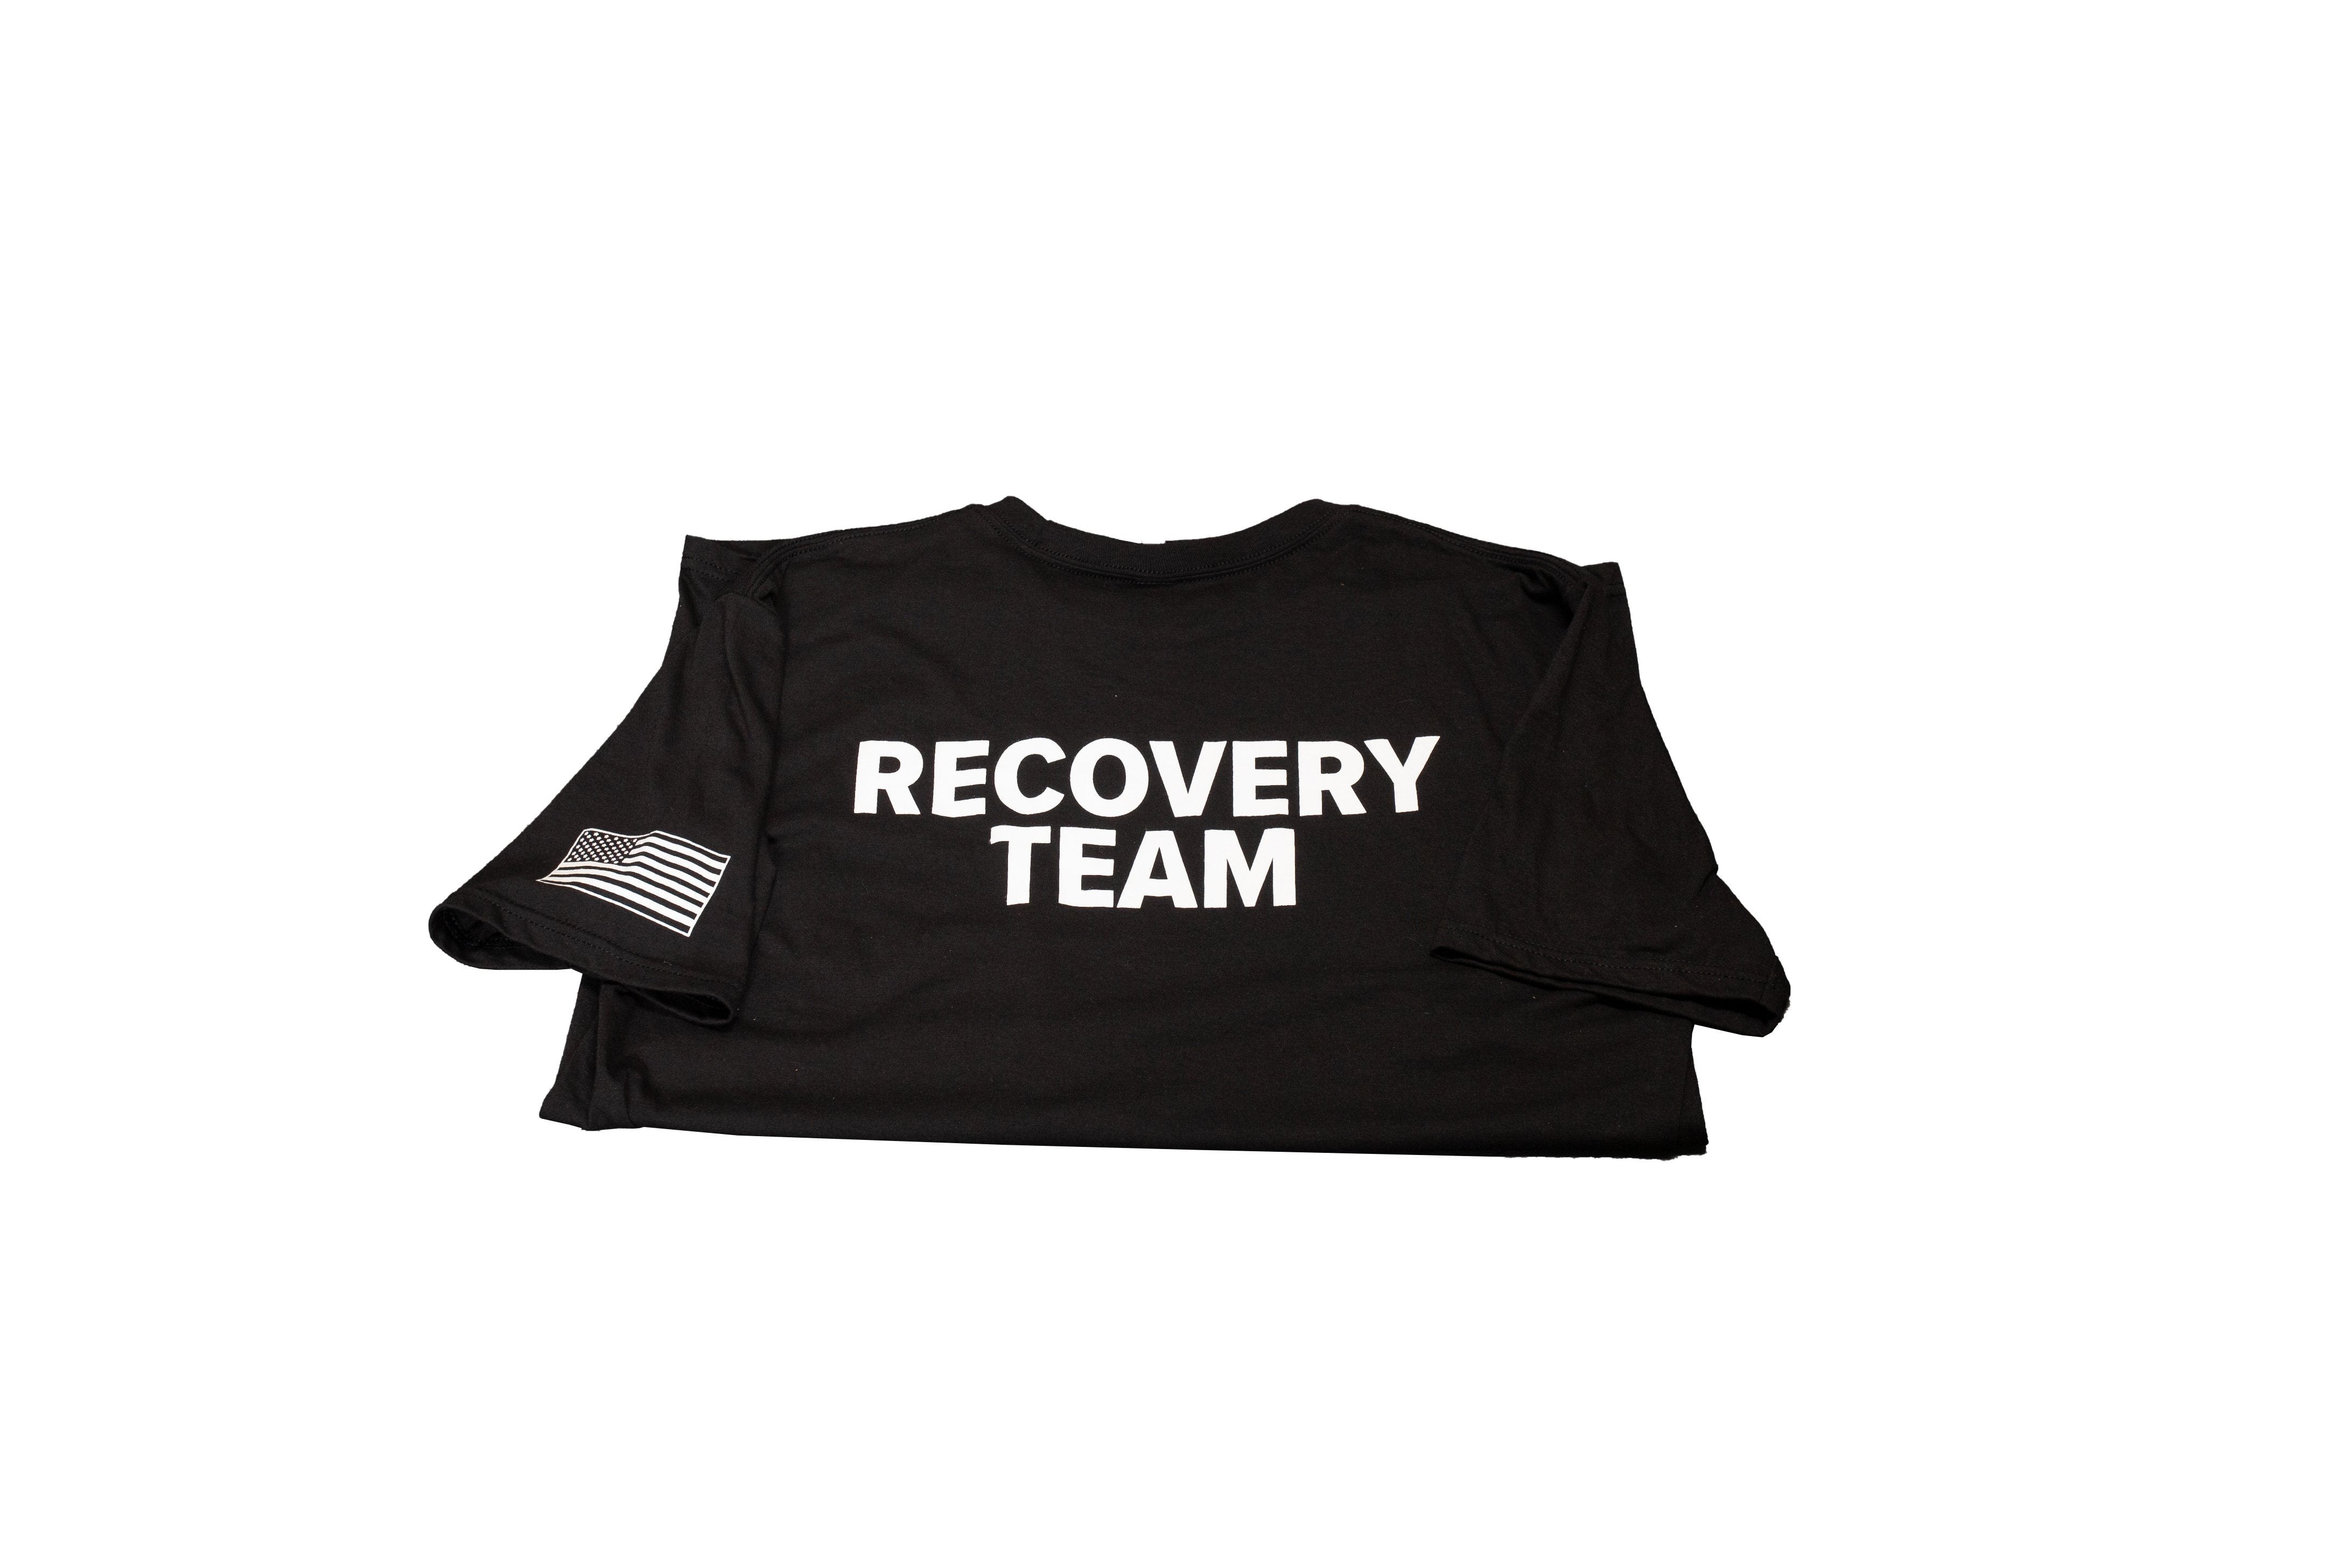 High Plains Prospectors Recovery Team T-Shirt